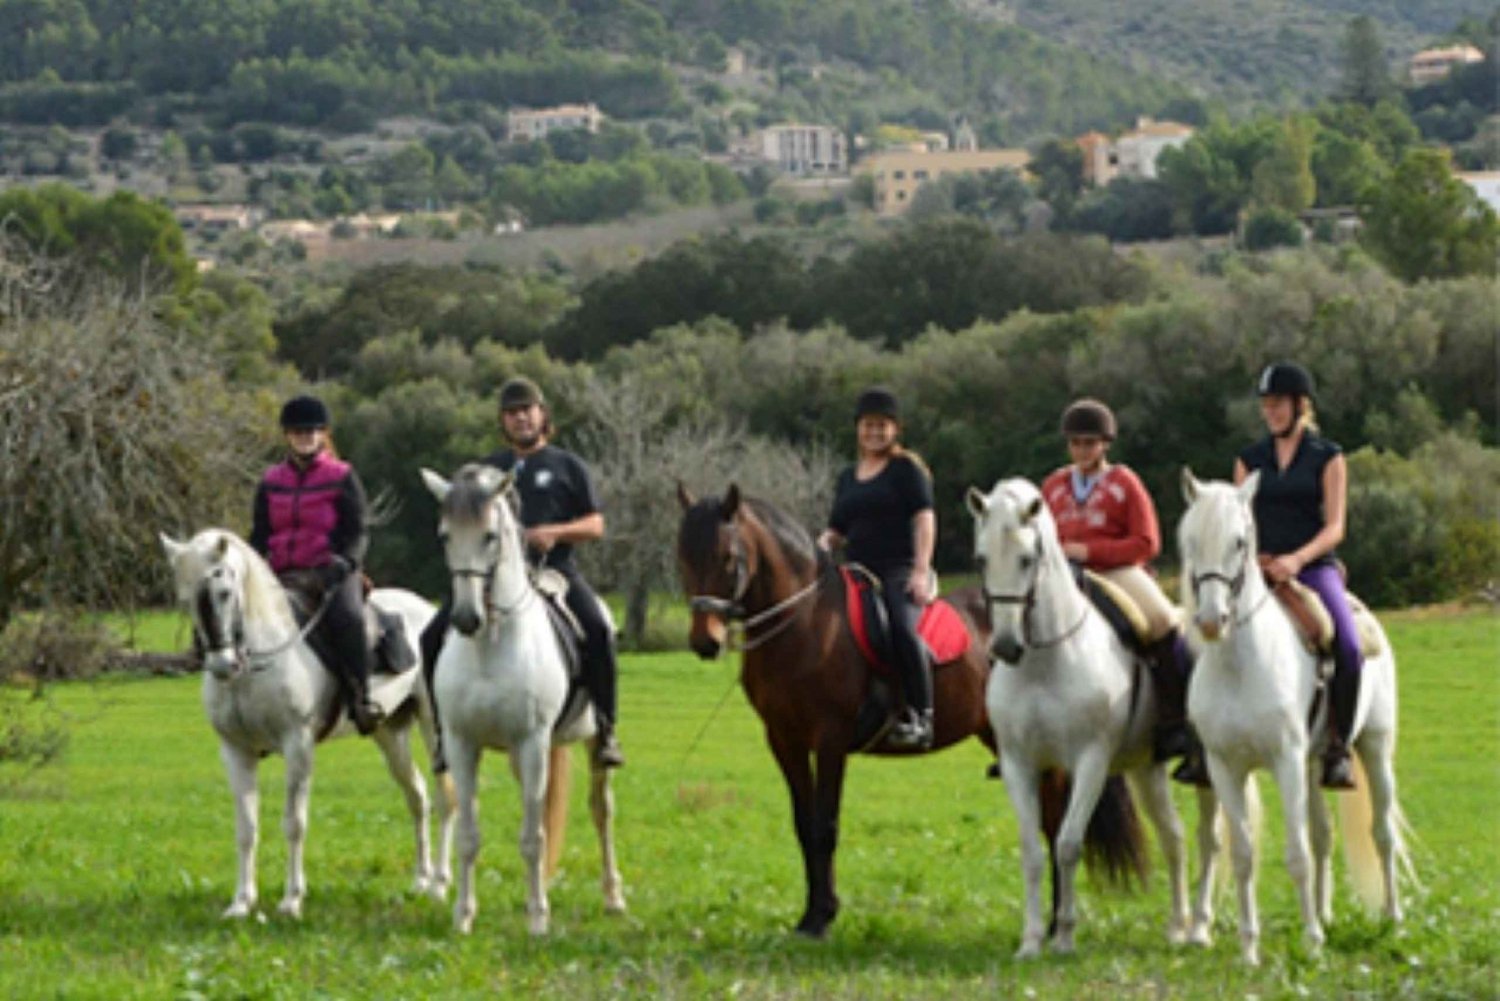 Mallorca: Guidet ridetur i Randa-dalen